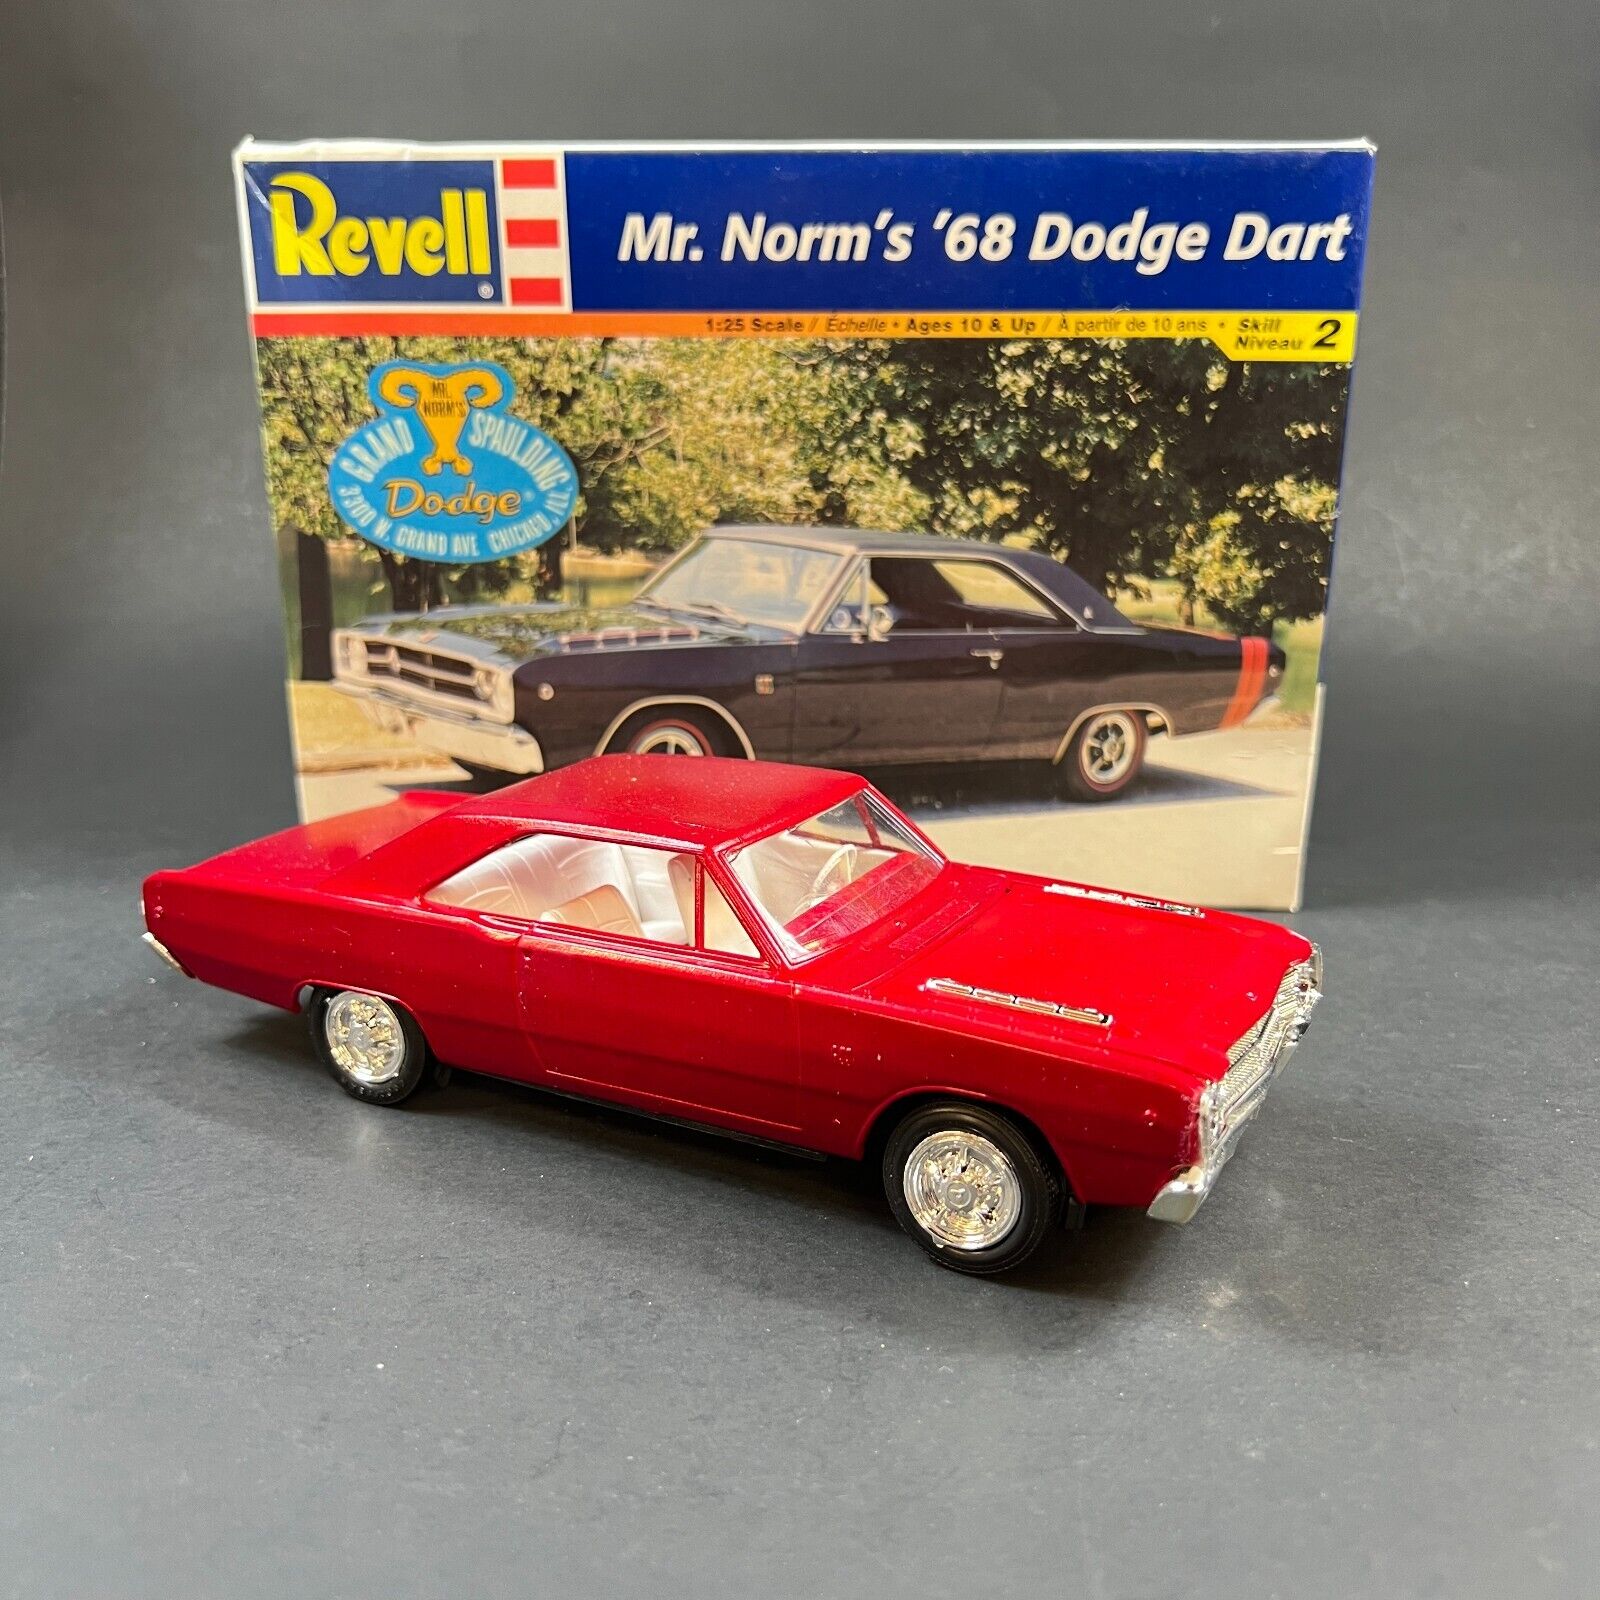 Revell Mr Norms 1968 Dodge Dart 1/25 Built Model Car Kit with Original Box